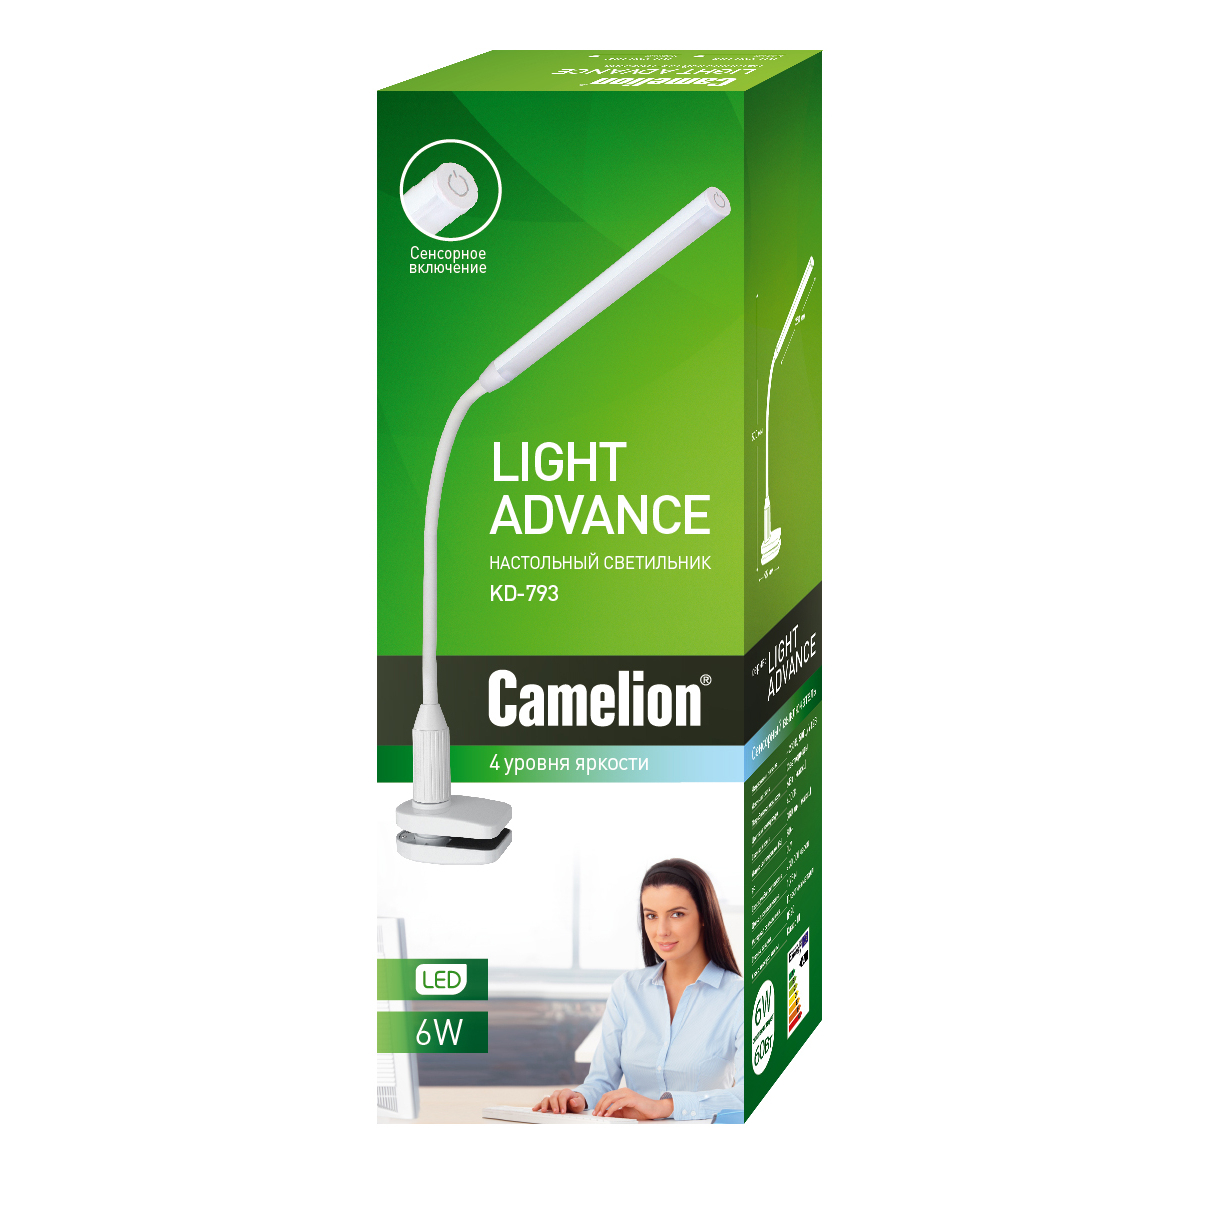 Camelion KD-793 C01 белый LED((Свет-к настол,6 Вт,зажим-струбцина,230В,сенс,4 ур.ярк,4000К)